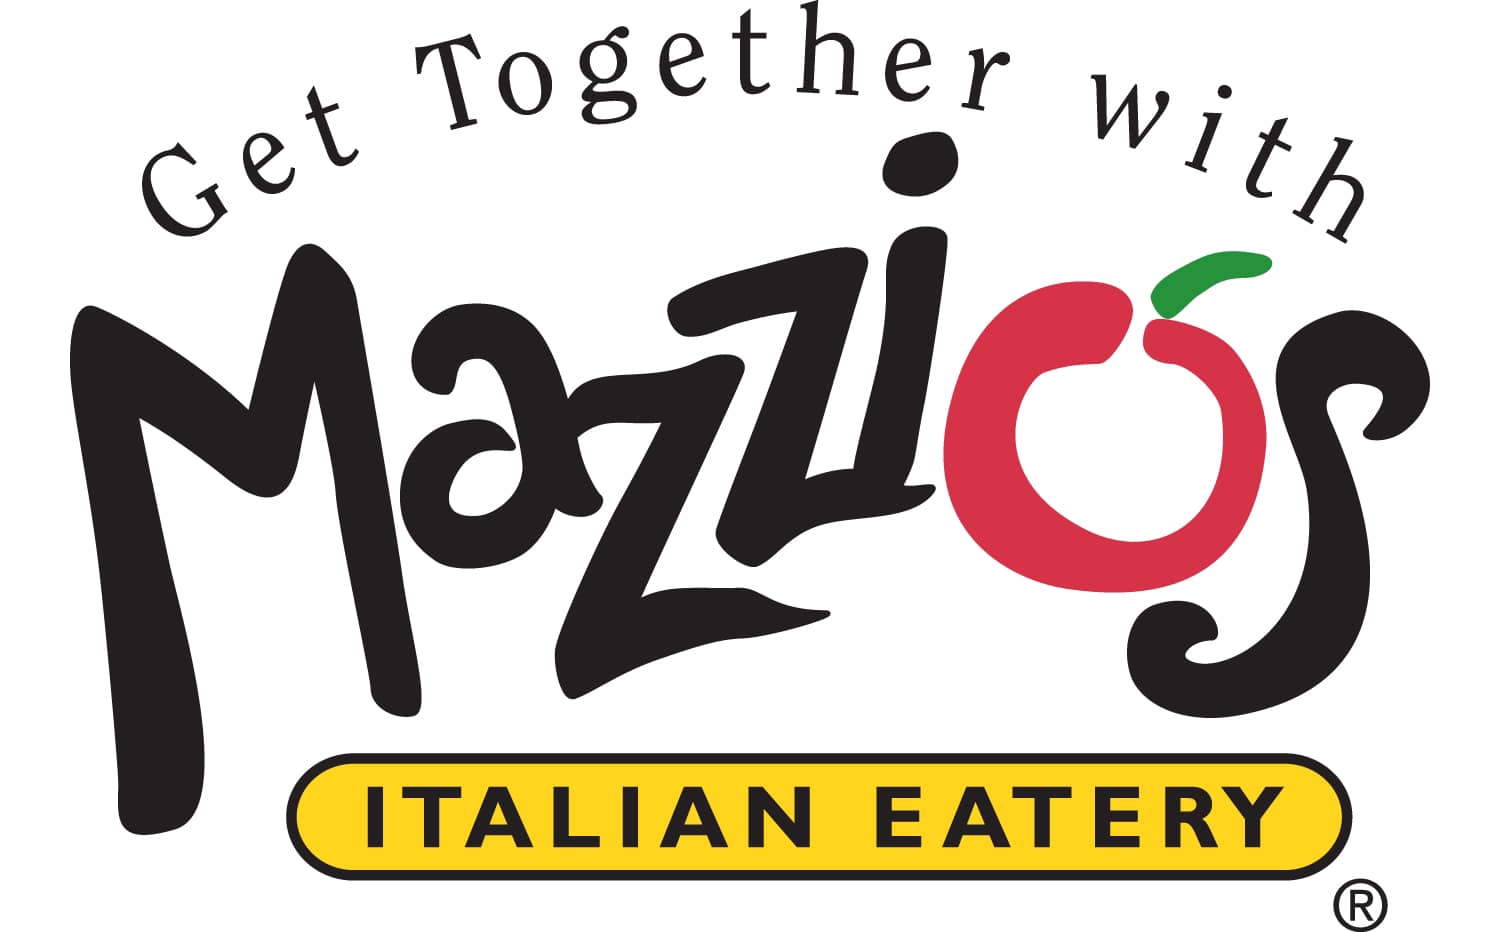 Mazzio's Italian Eatery 616 S Roosevelt Ave, Burlington, IA 52601